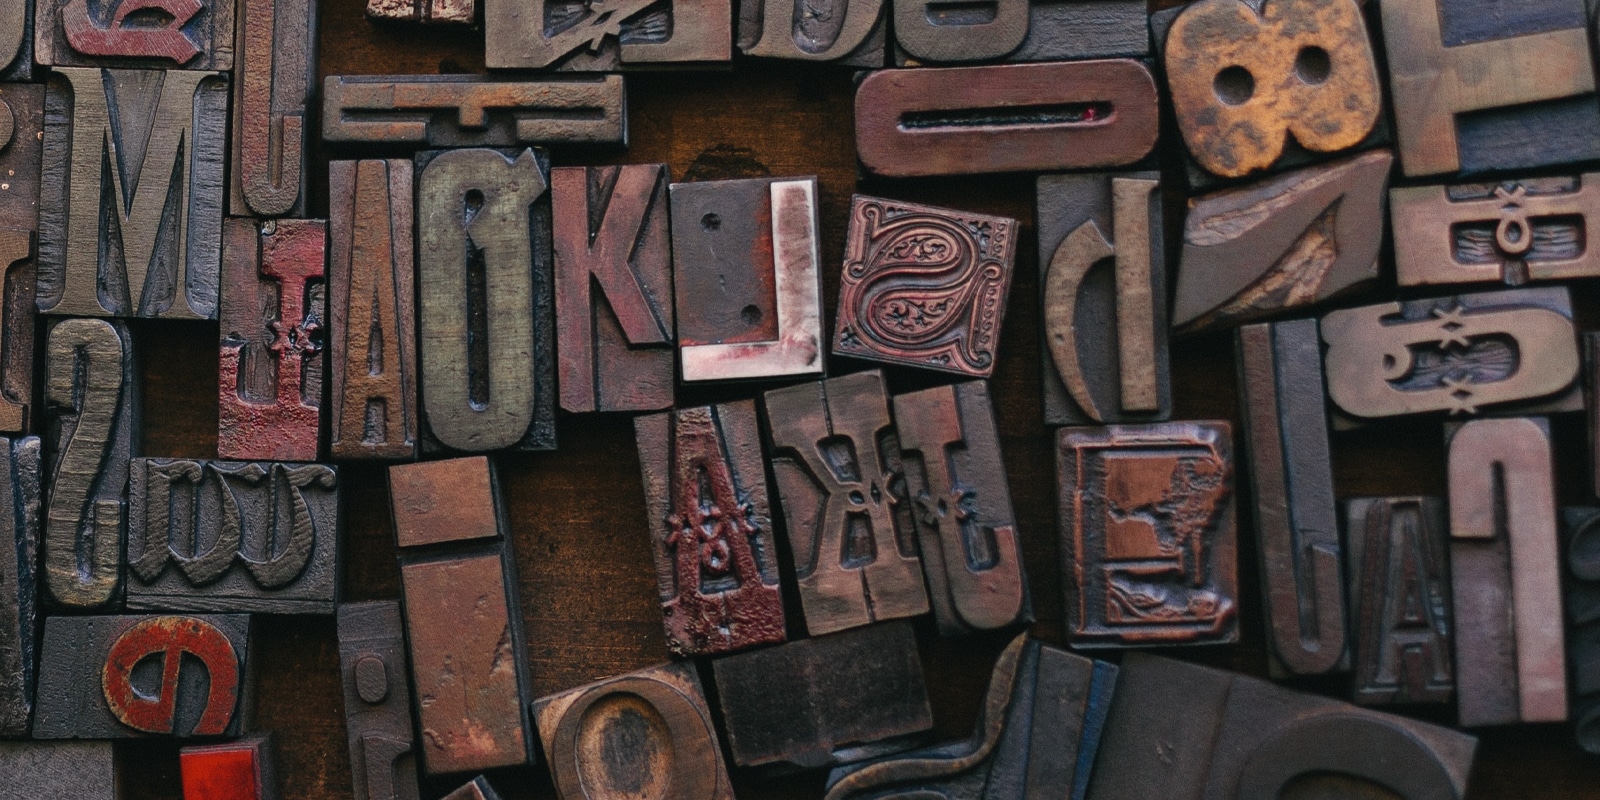 AQA A-Level English Language - An image of letter blocks